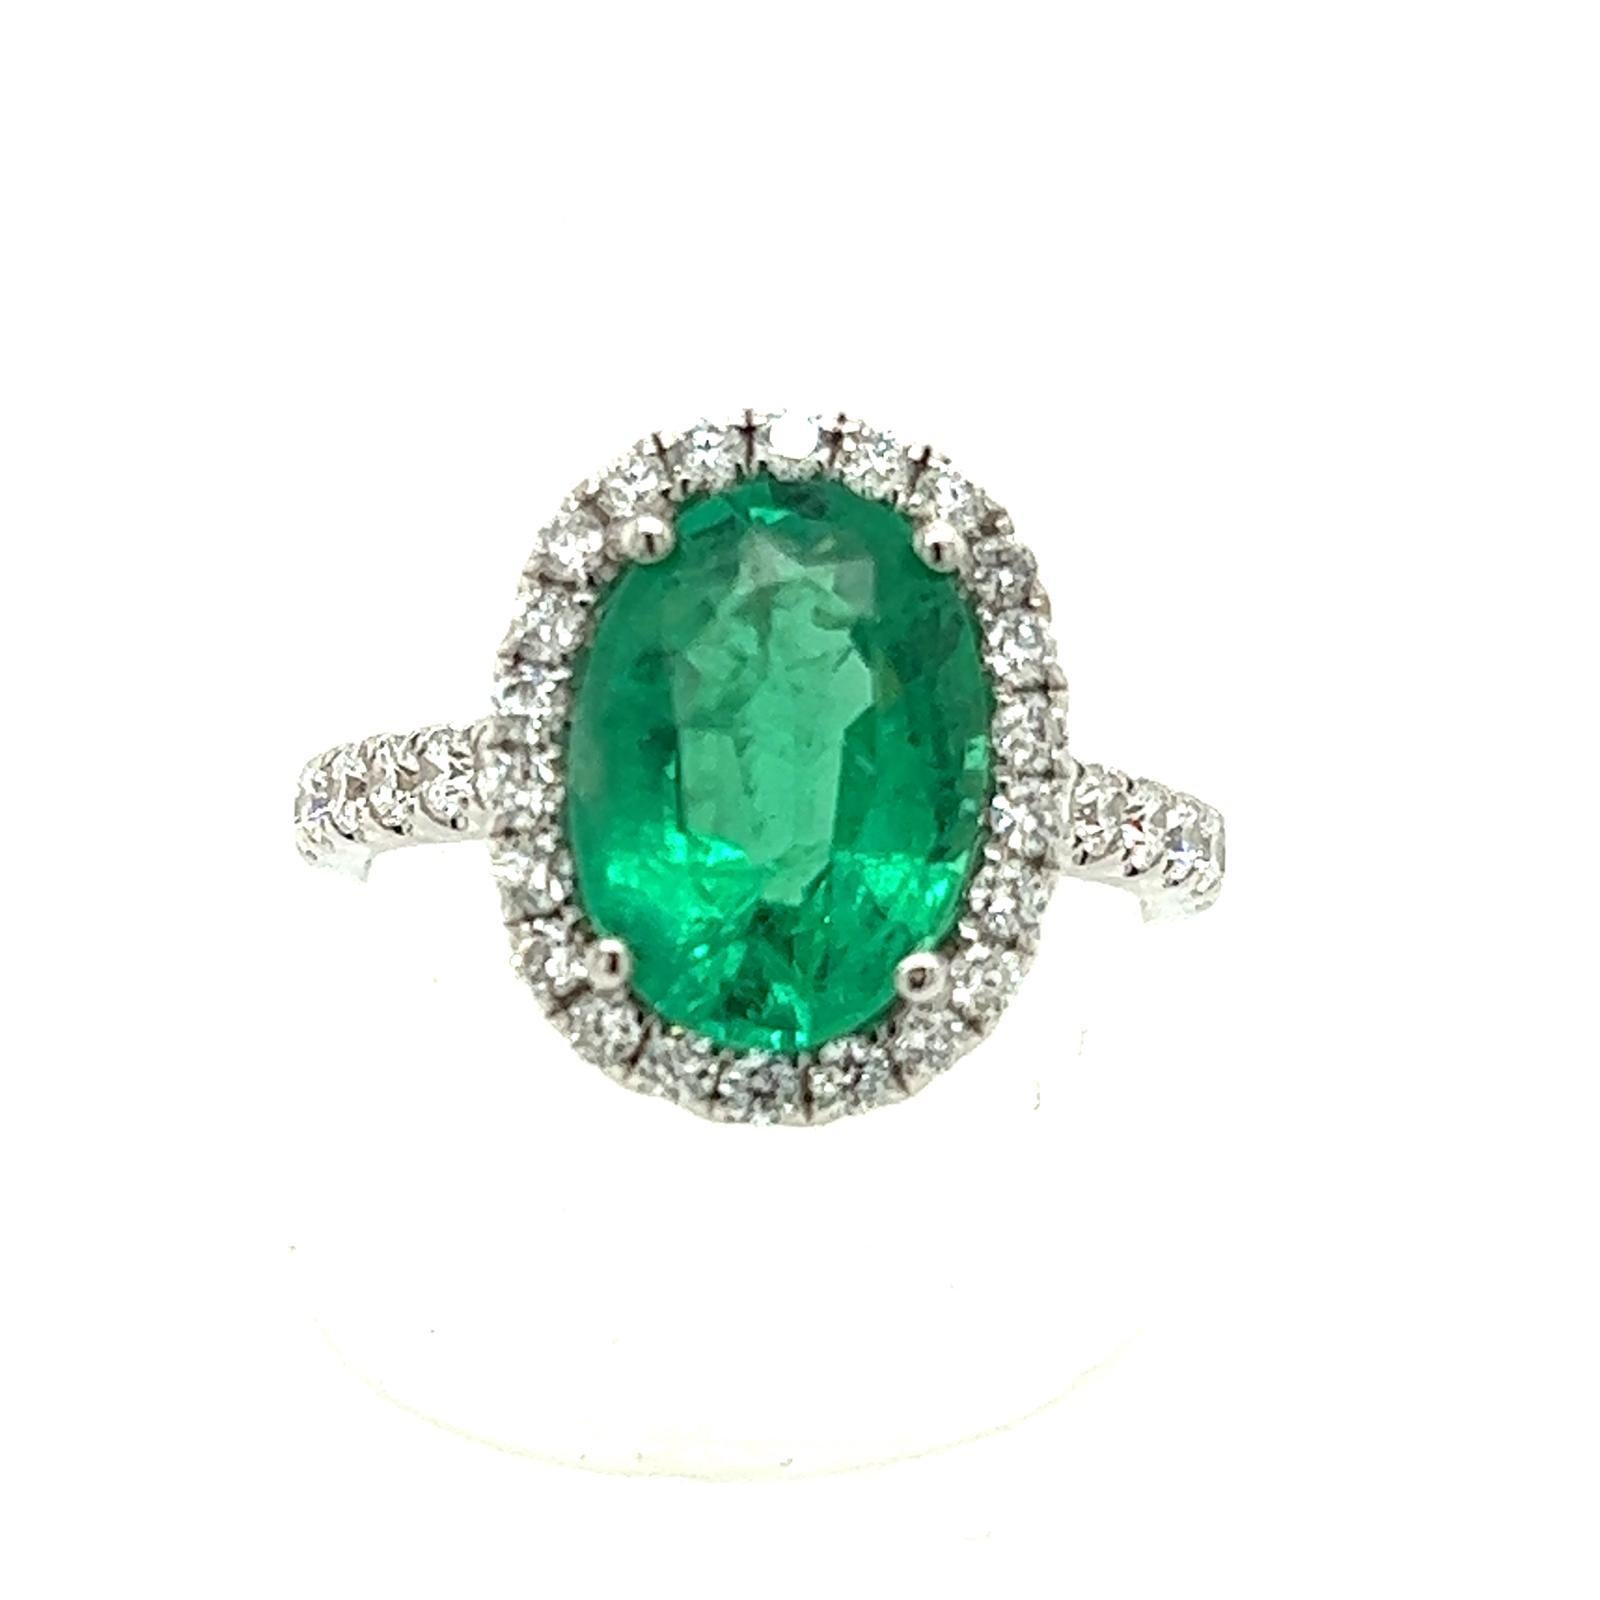 Oval emerald weighing 2.88 carats
Diamonds weighing .69 cts
Halo style ring. 
Zambian origin
18 karat white gold